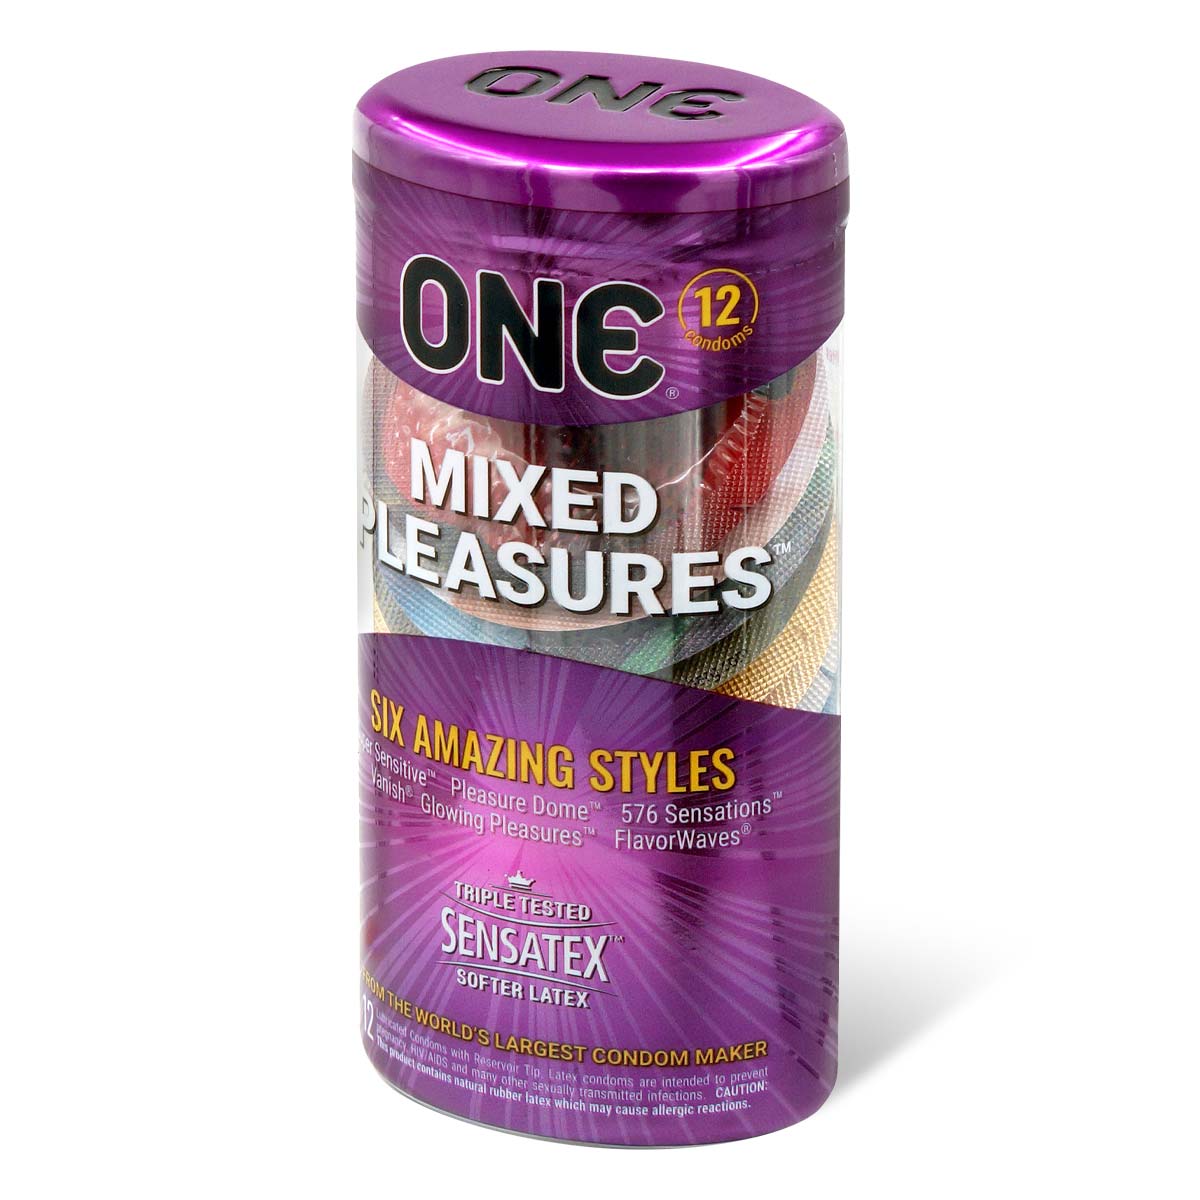 ONE Mixed Pleasures 12's Pack Latex Condom-p_1